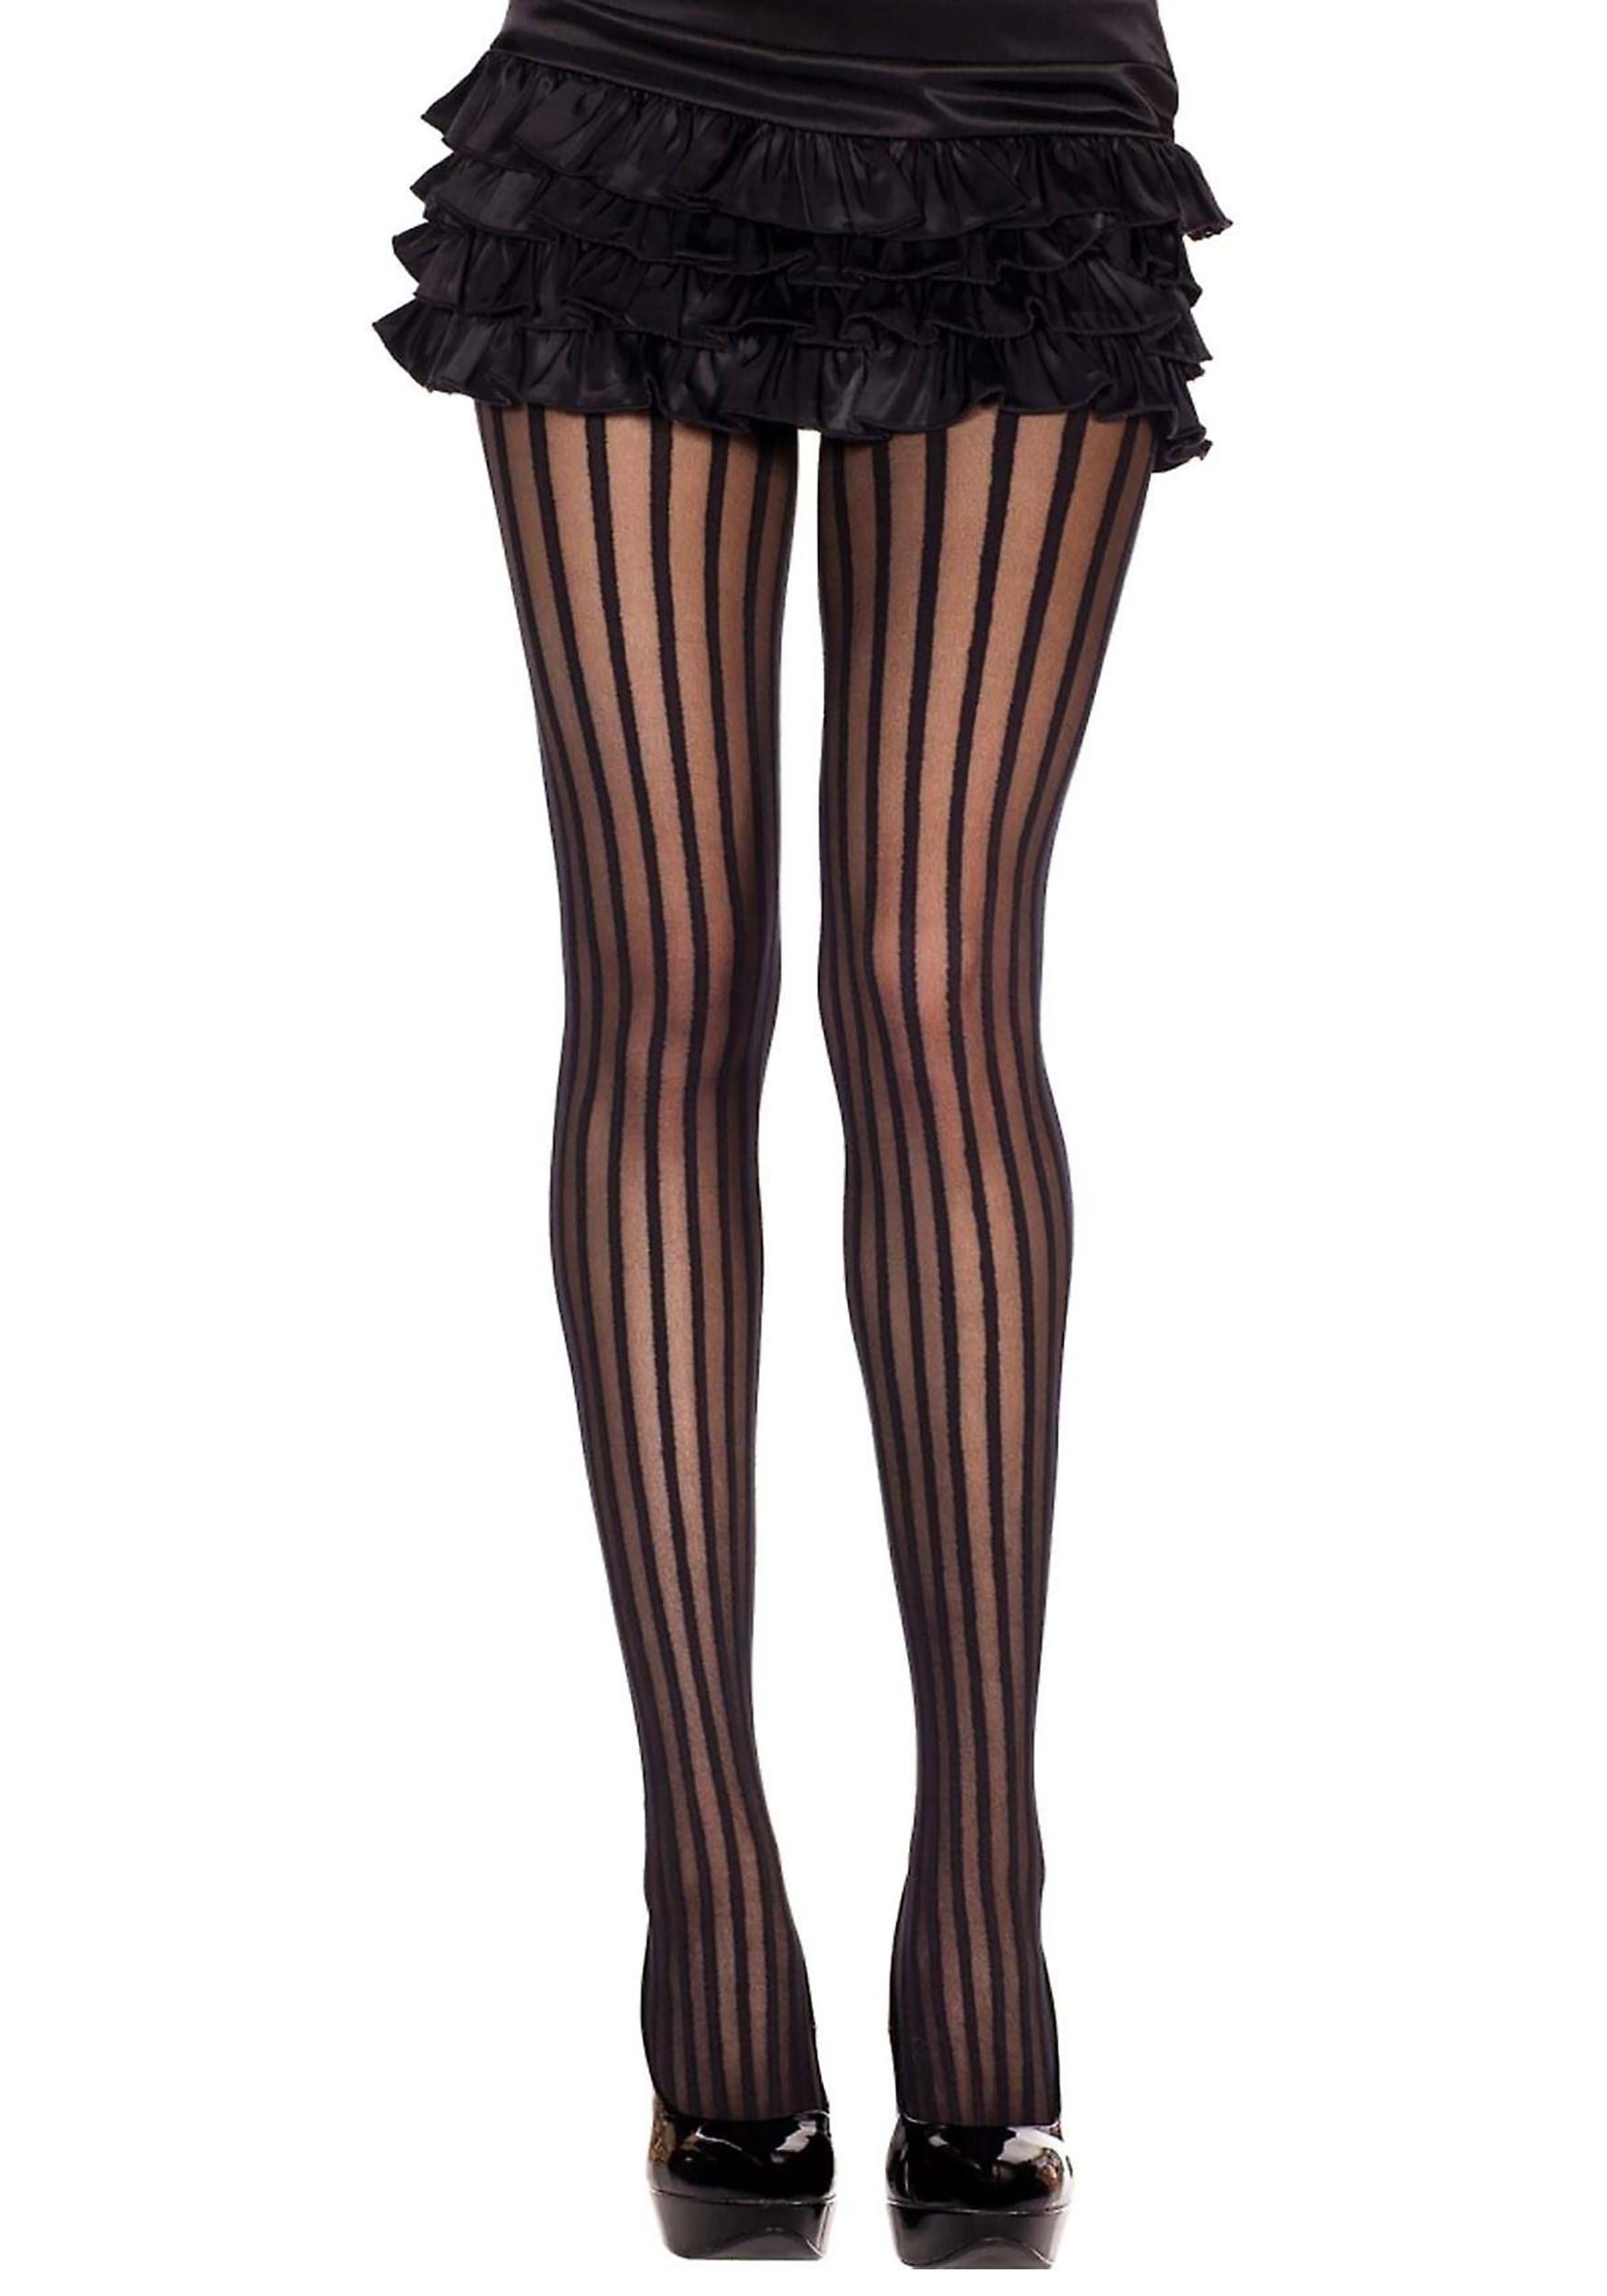 Socks & Hosiery Sexy Black Vertical Striped Tights Gothic Punk Stripe Women  Temptation Sheer Suspender Pantyhose From Seein, $43.06